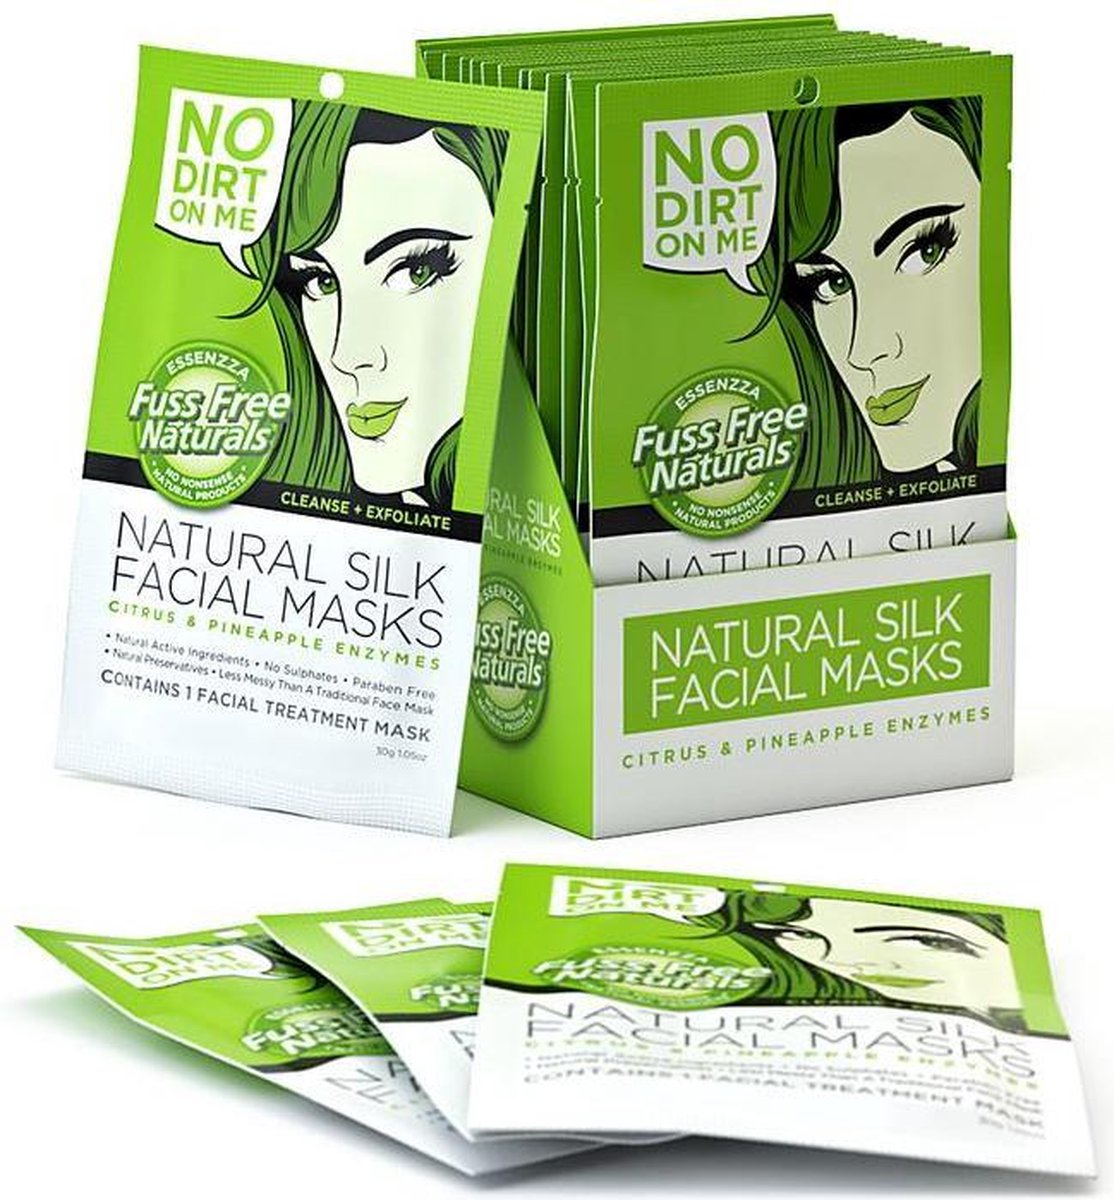 Fuss Free Nat Face mask cleanse exfoliate 1st